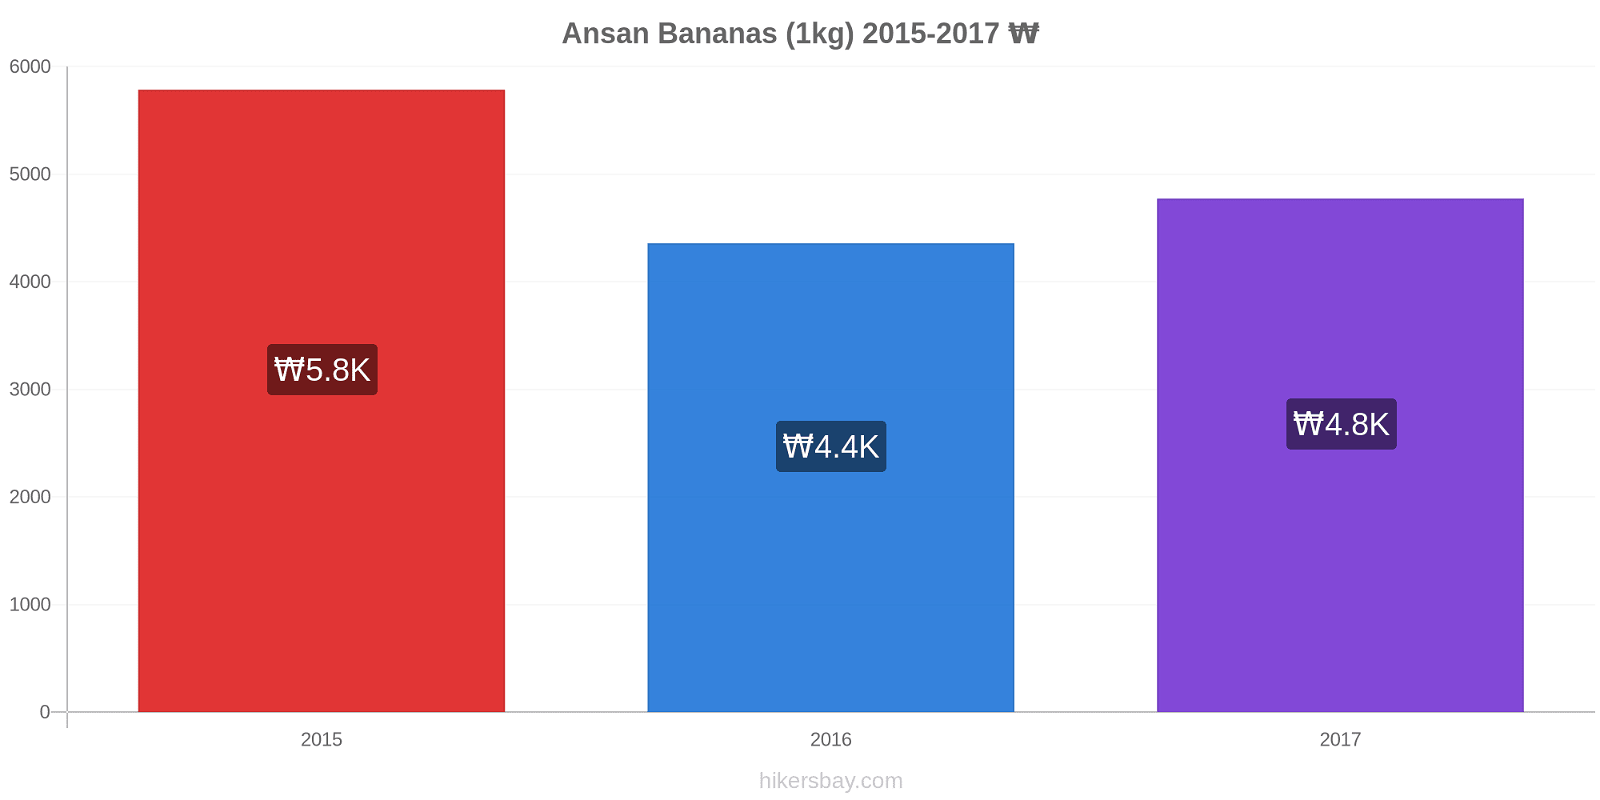 Ansan price changes Bananas (1kg) hikersbay.com